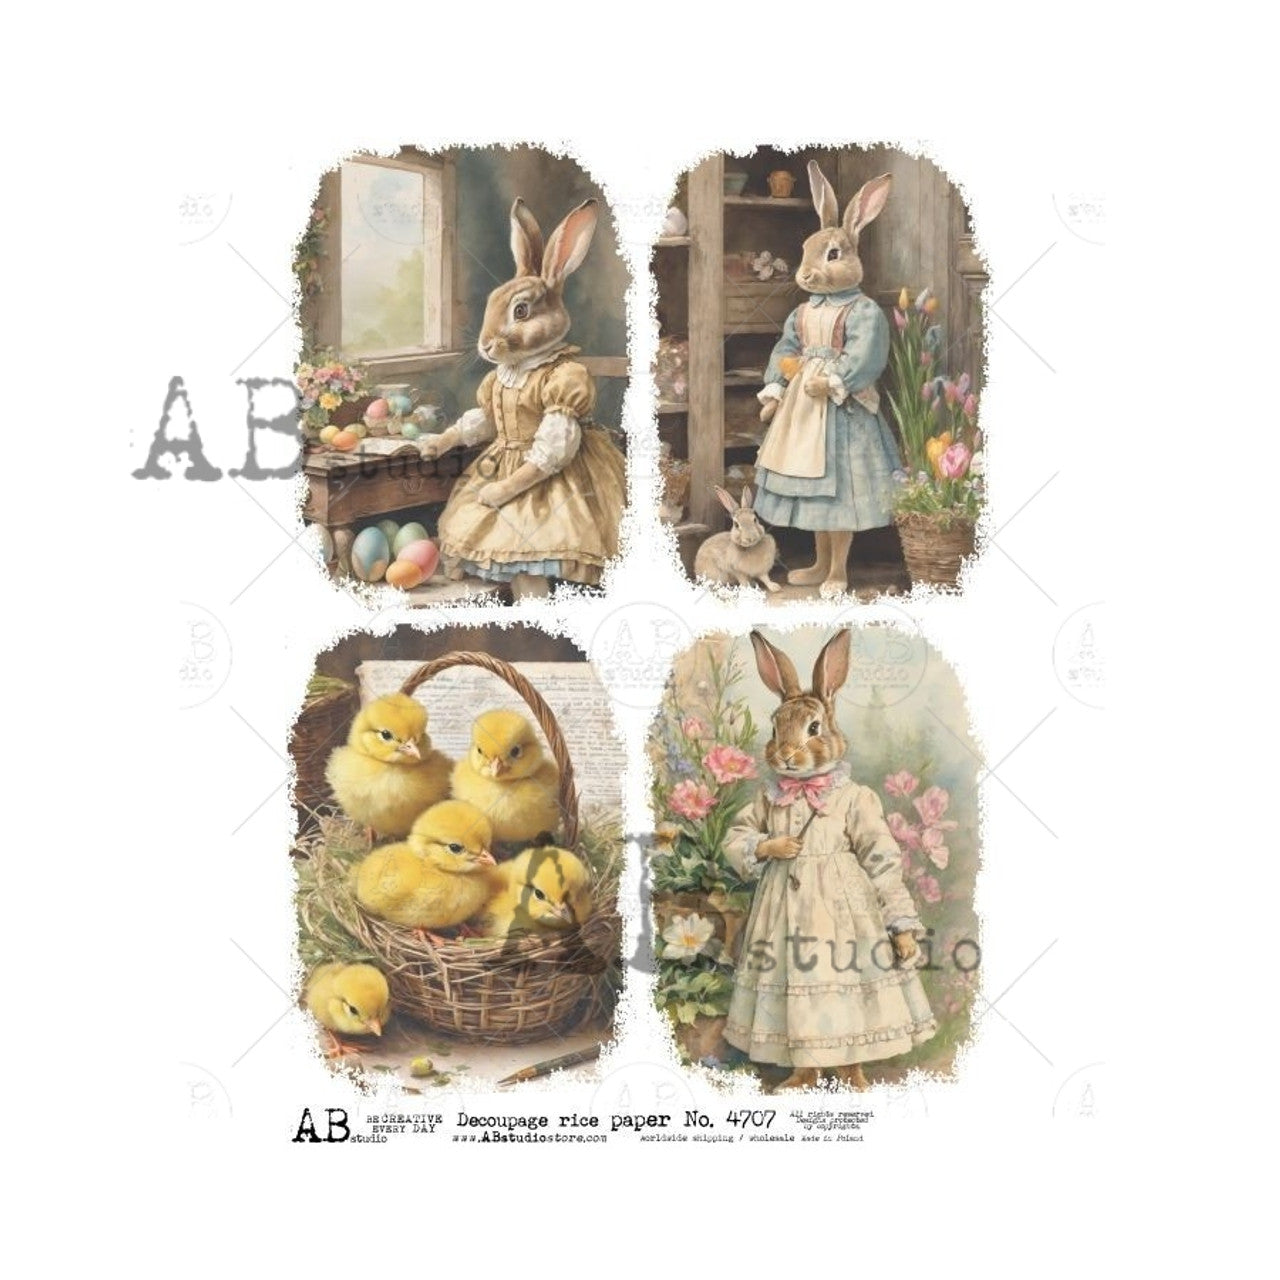 Ladies in Dresses 4 Pack (#4707) Rice Paper- AB Studios Decoupage Queen